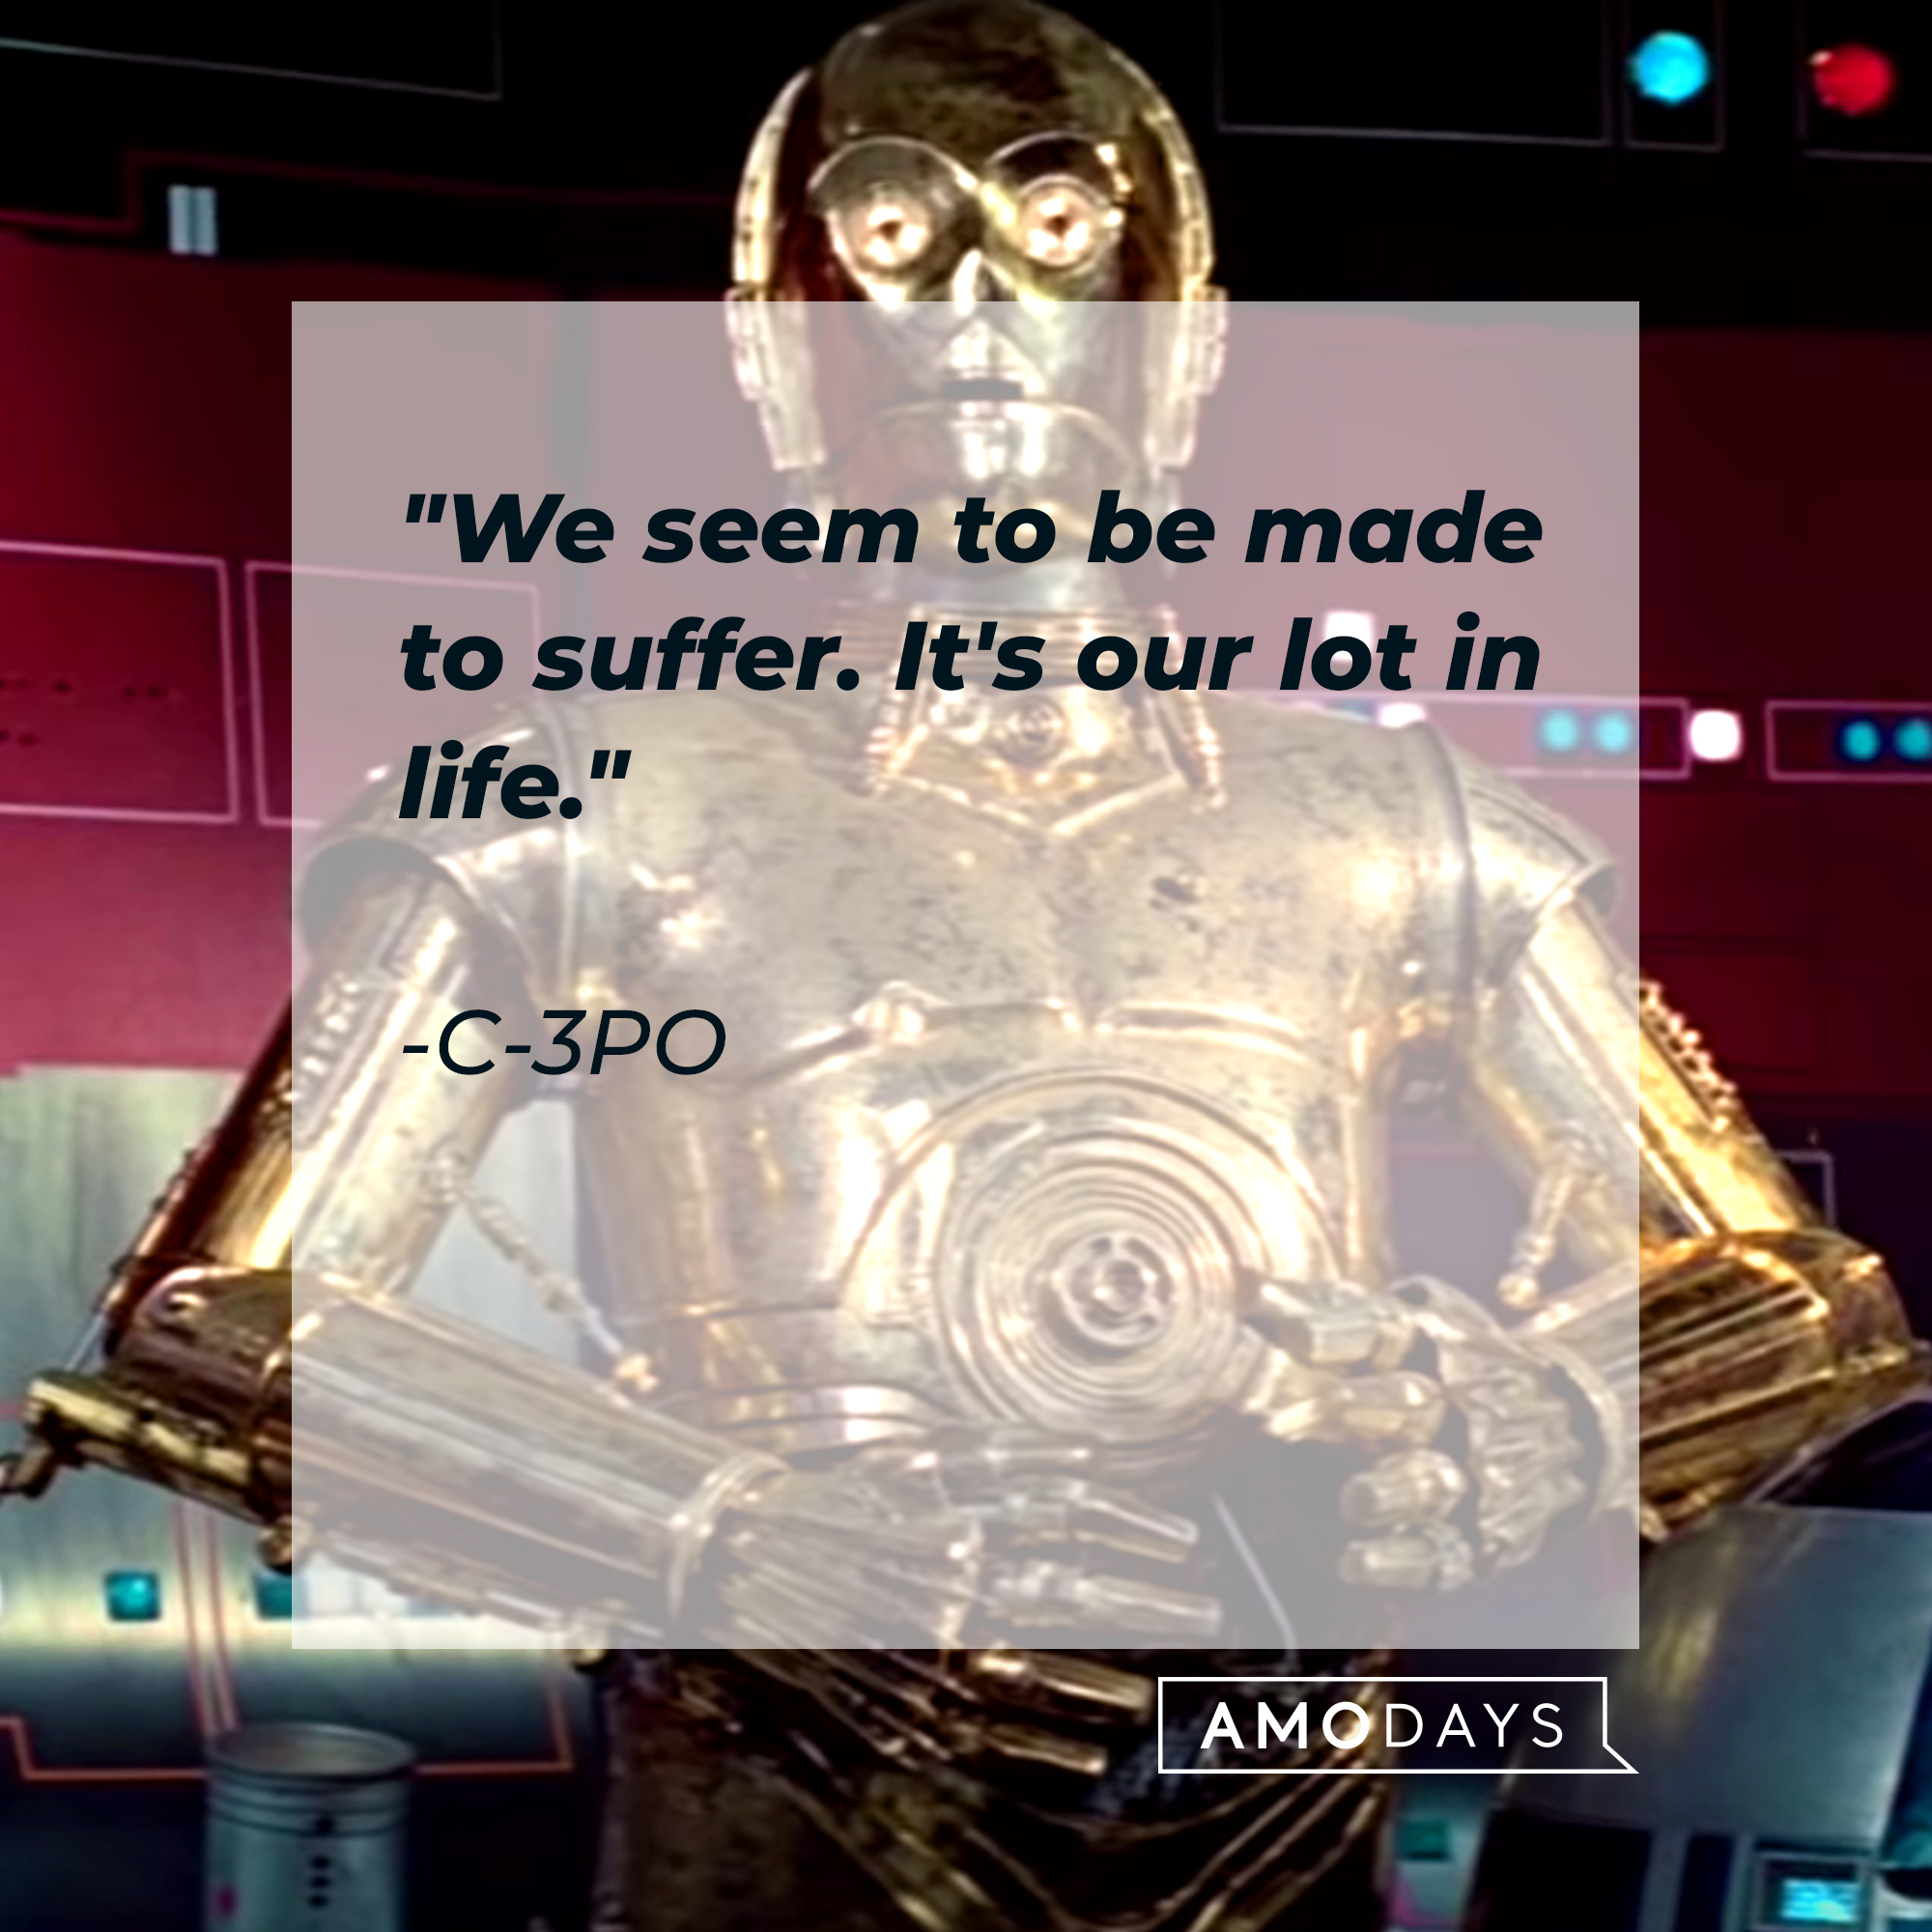 C-3PO's quote, "We seem to be made to suffer. It's our lot in life." | Source: Facebook/StarWars